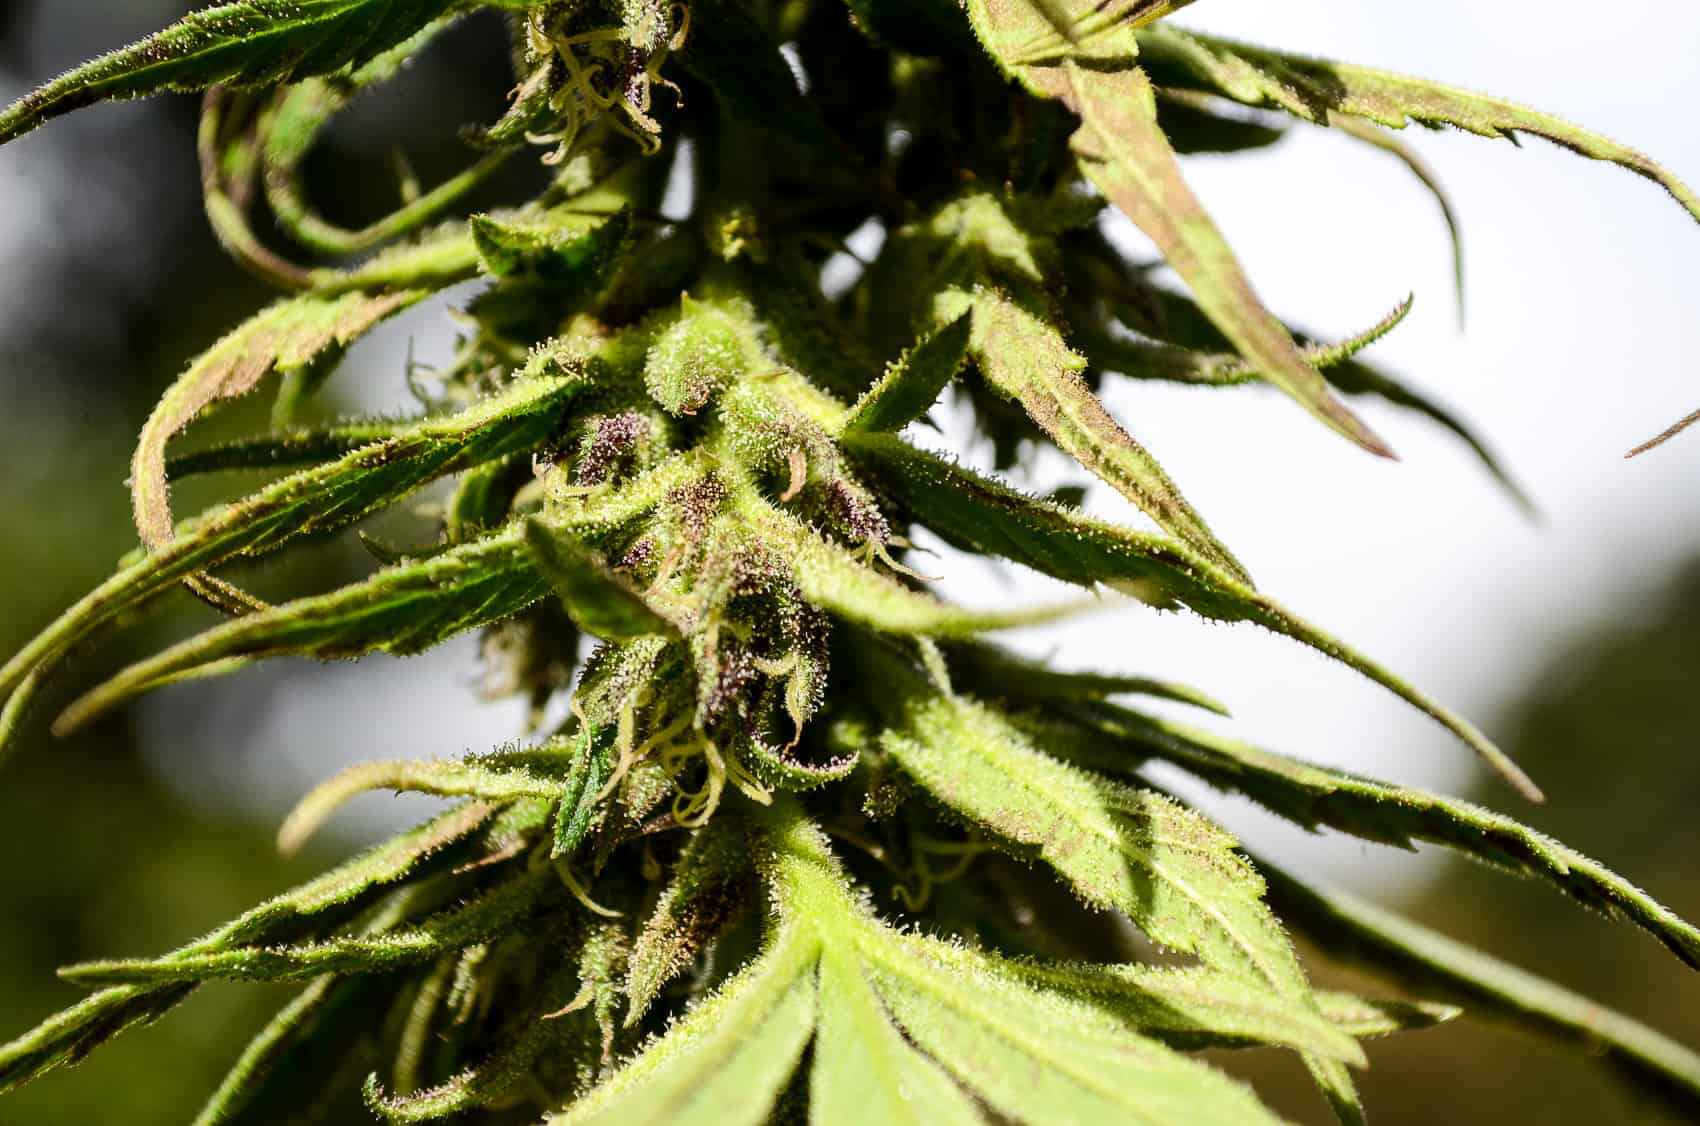 legalization of medical cannabis